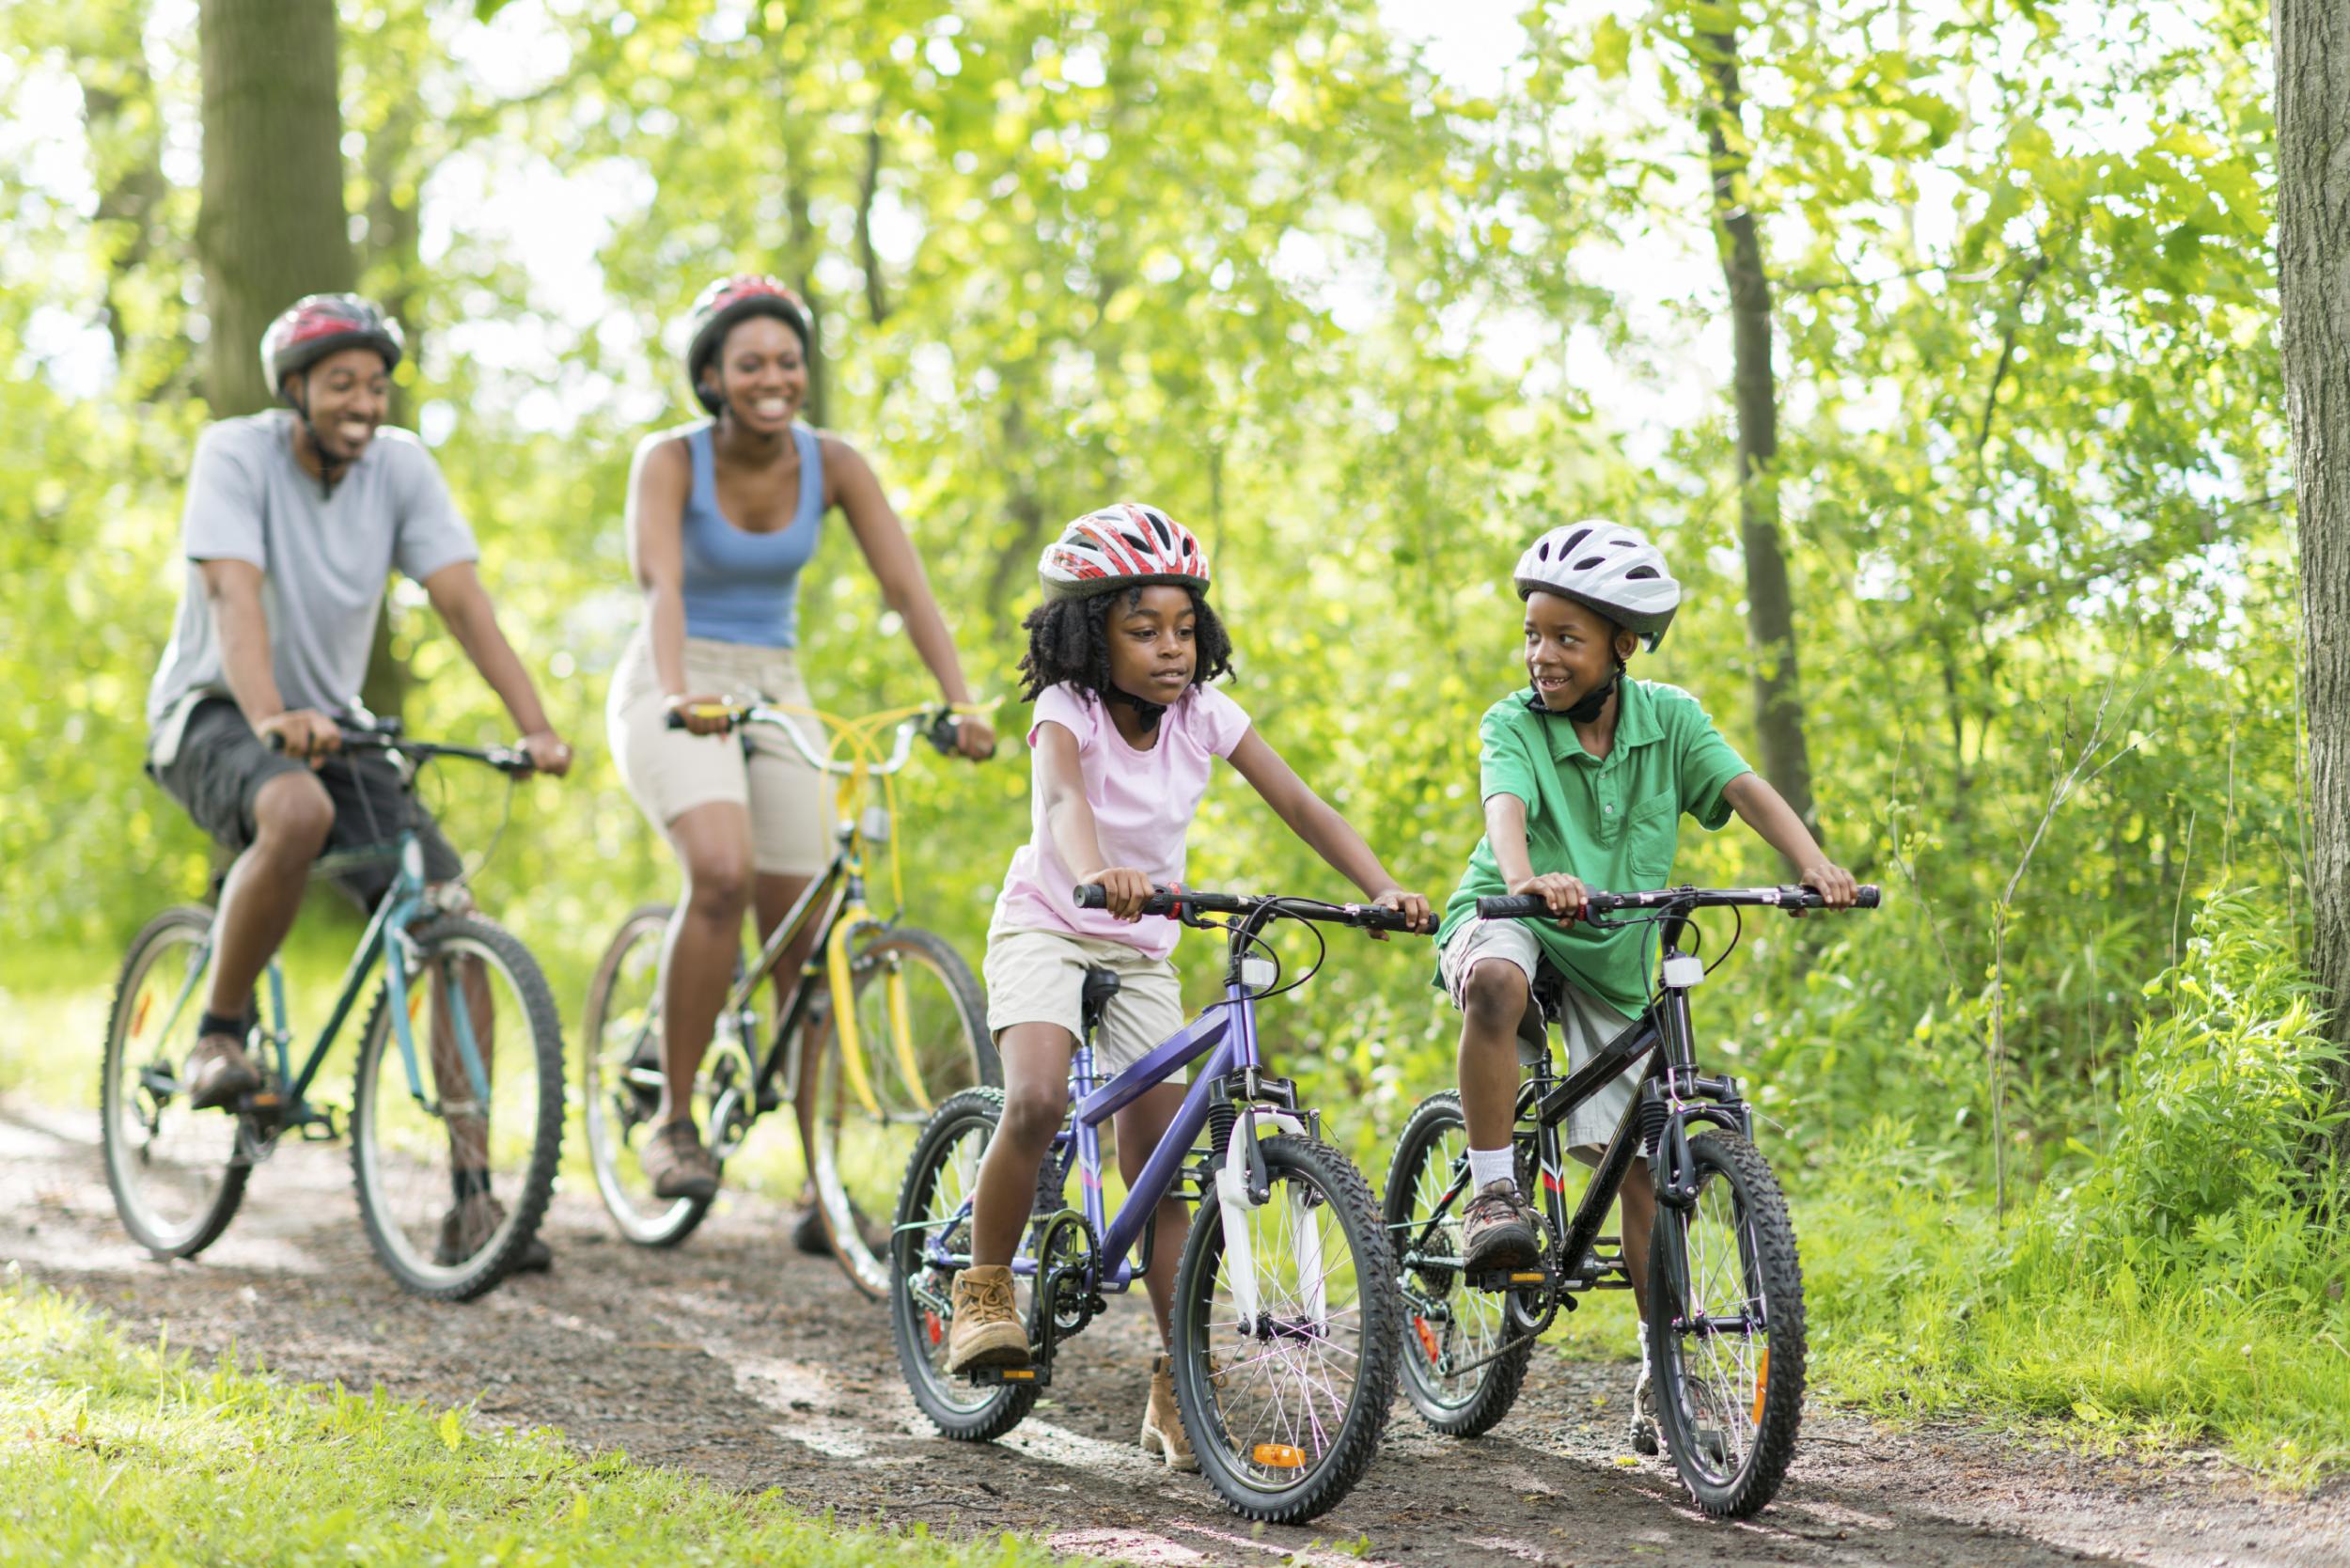 Виды отдыха на каникулах. Прогулка на природе. Велосипед на природе. Прогулка на велосипеде. Семья на велосипедах.